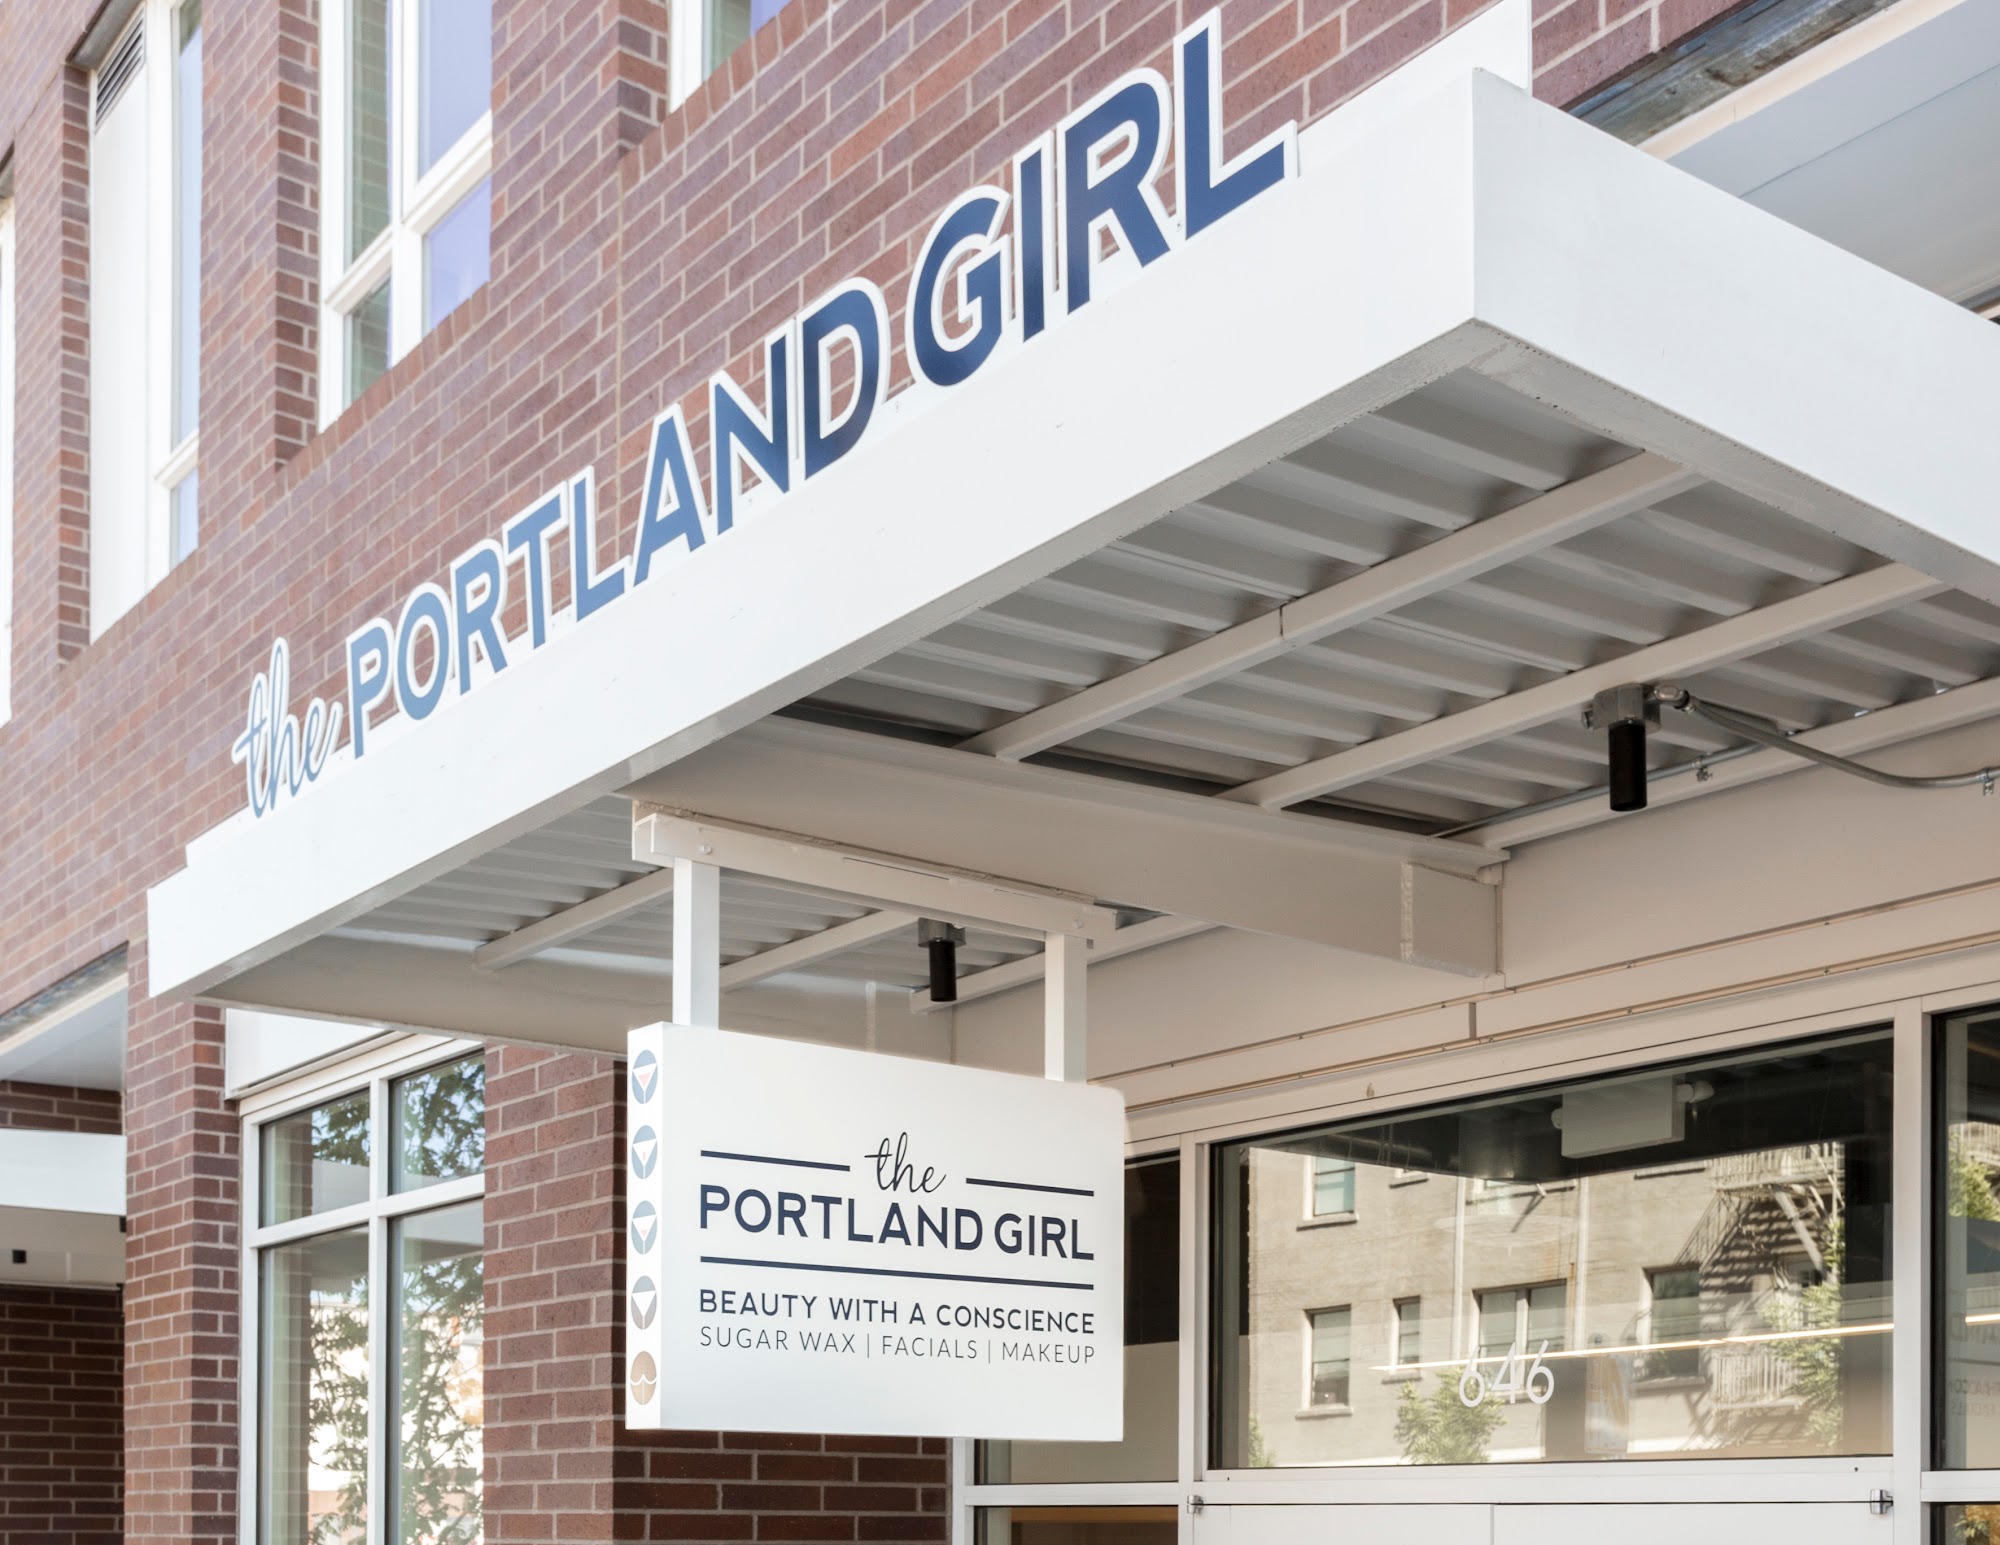 The Portland Girl